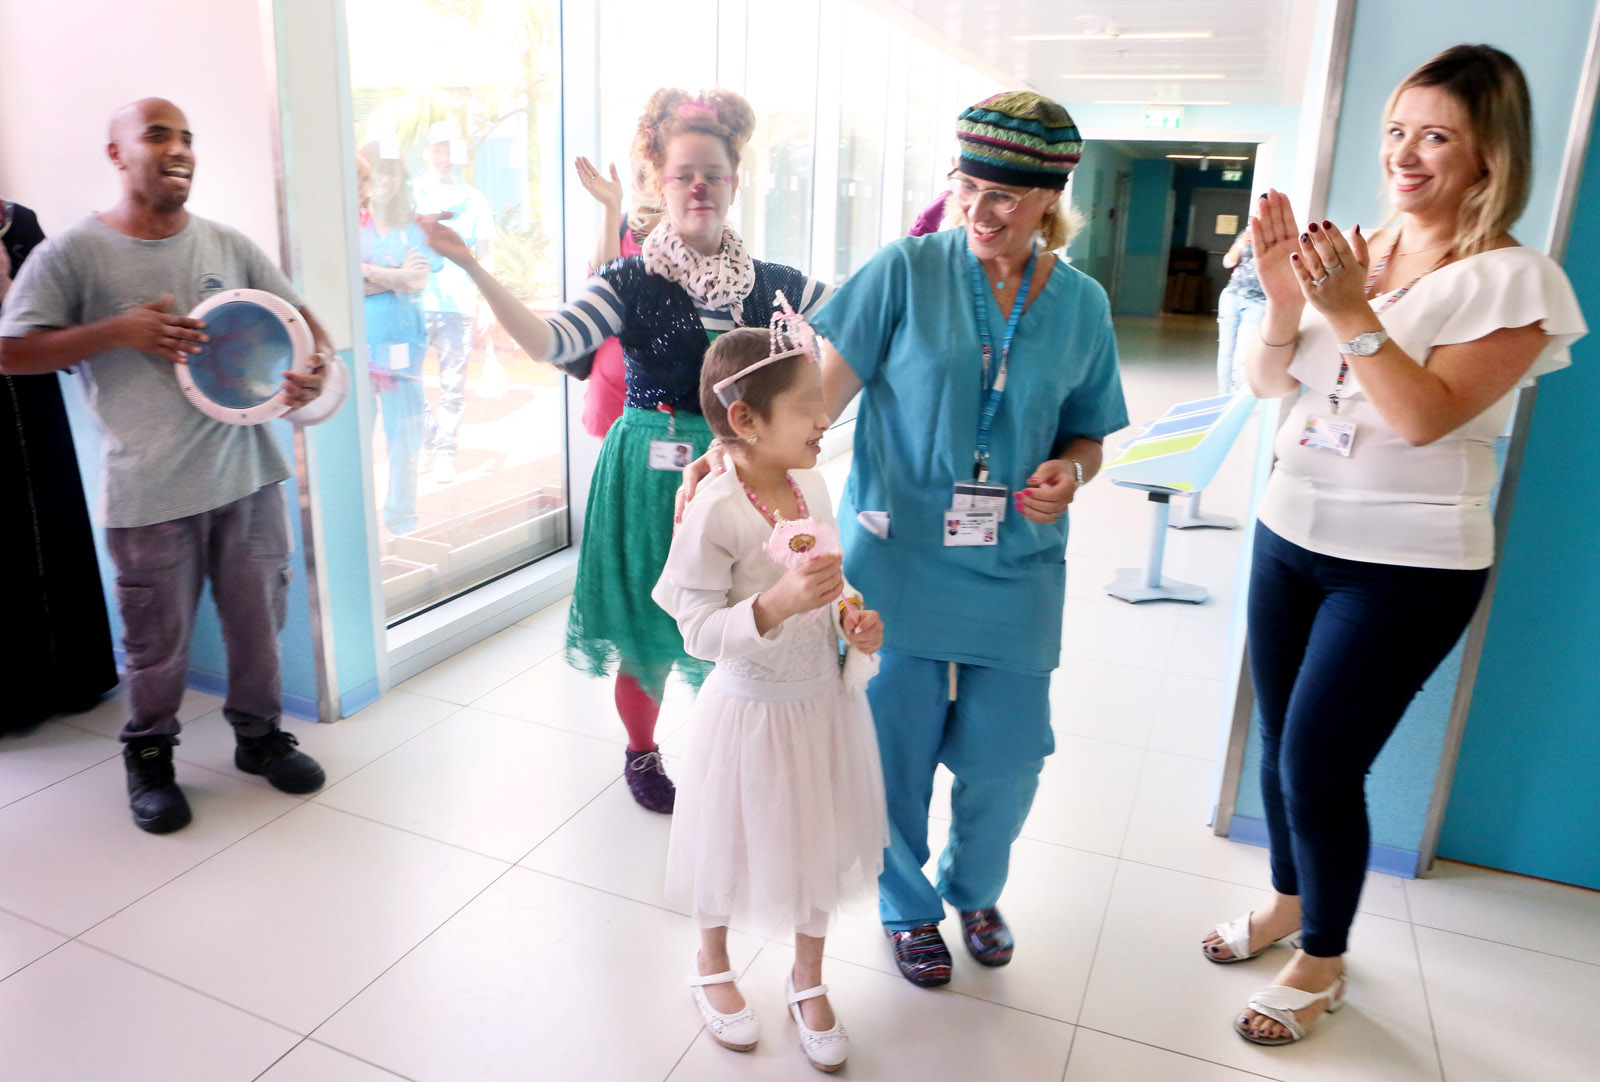 Israeli hospital treats Syrians suffering from emotional trauma